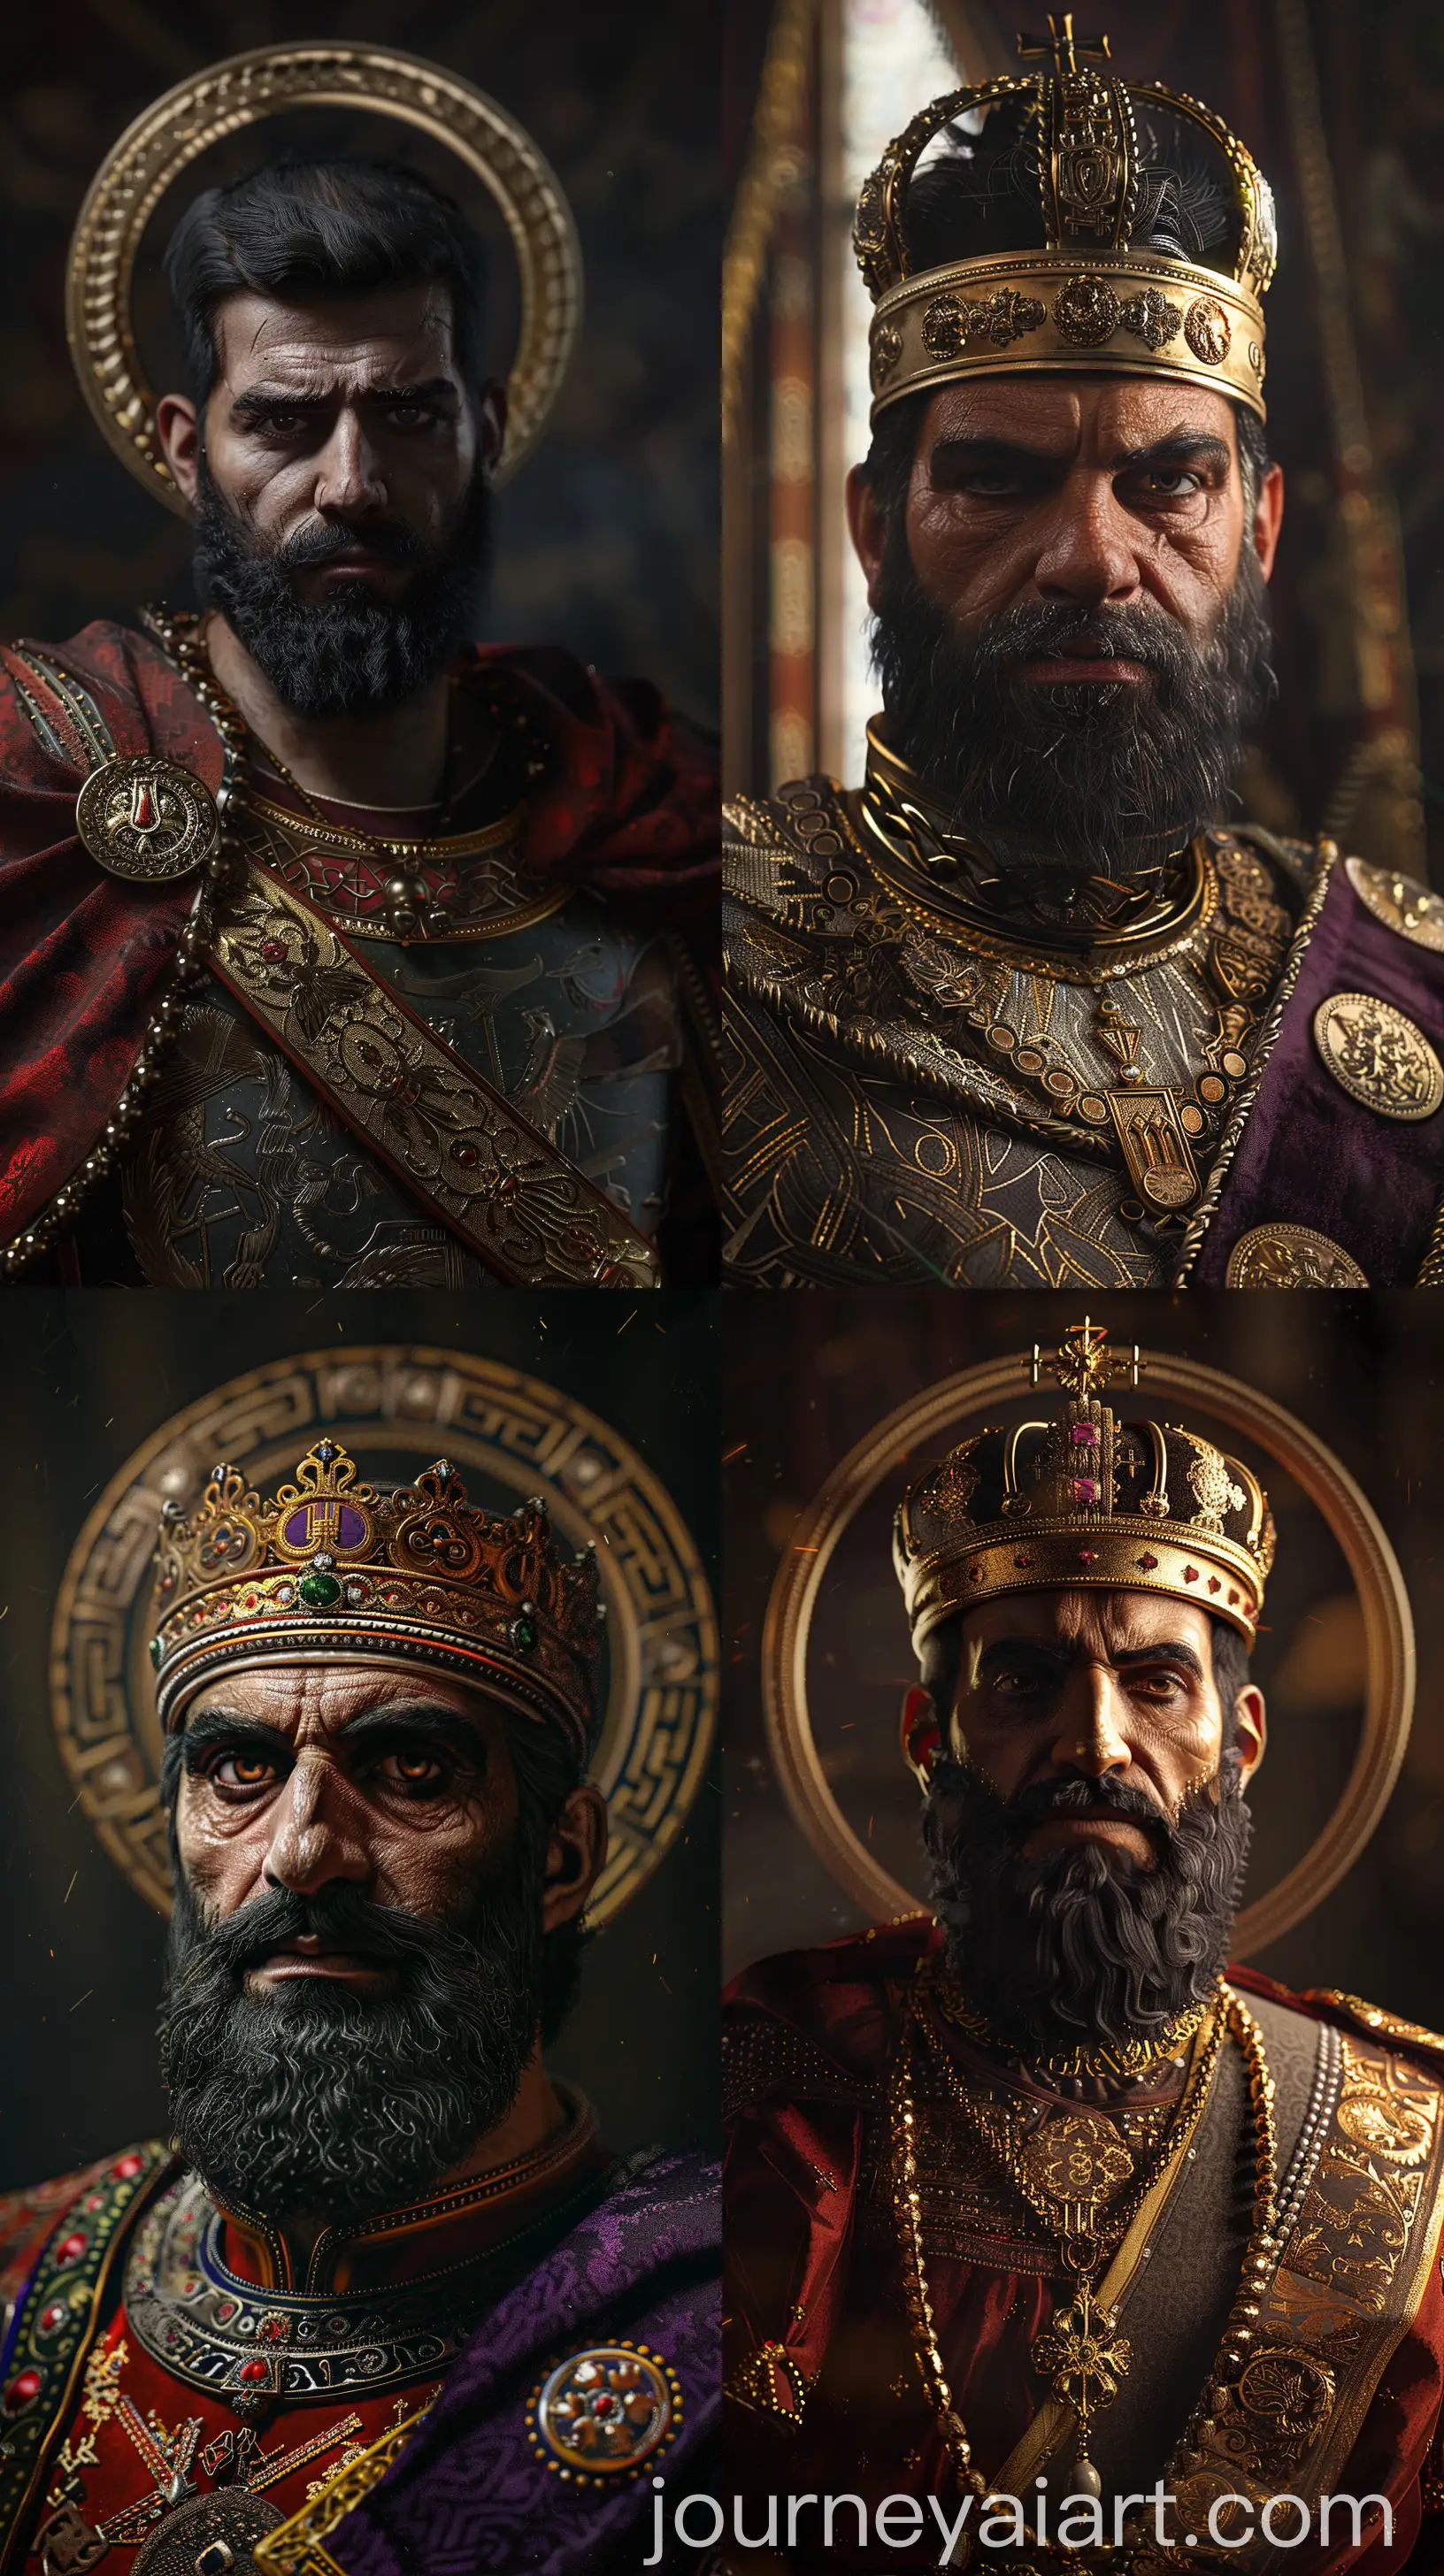 Byzantine-Emperor-in-Komnenian-Period-with-Saintly-Halo